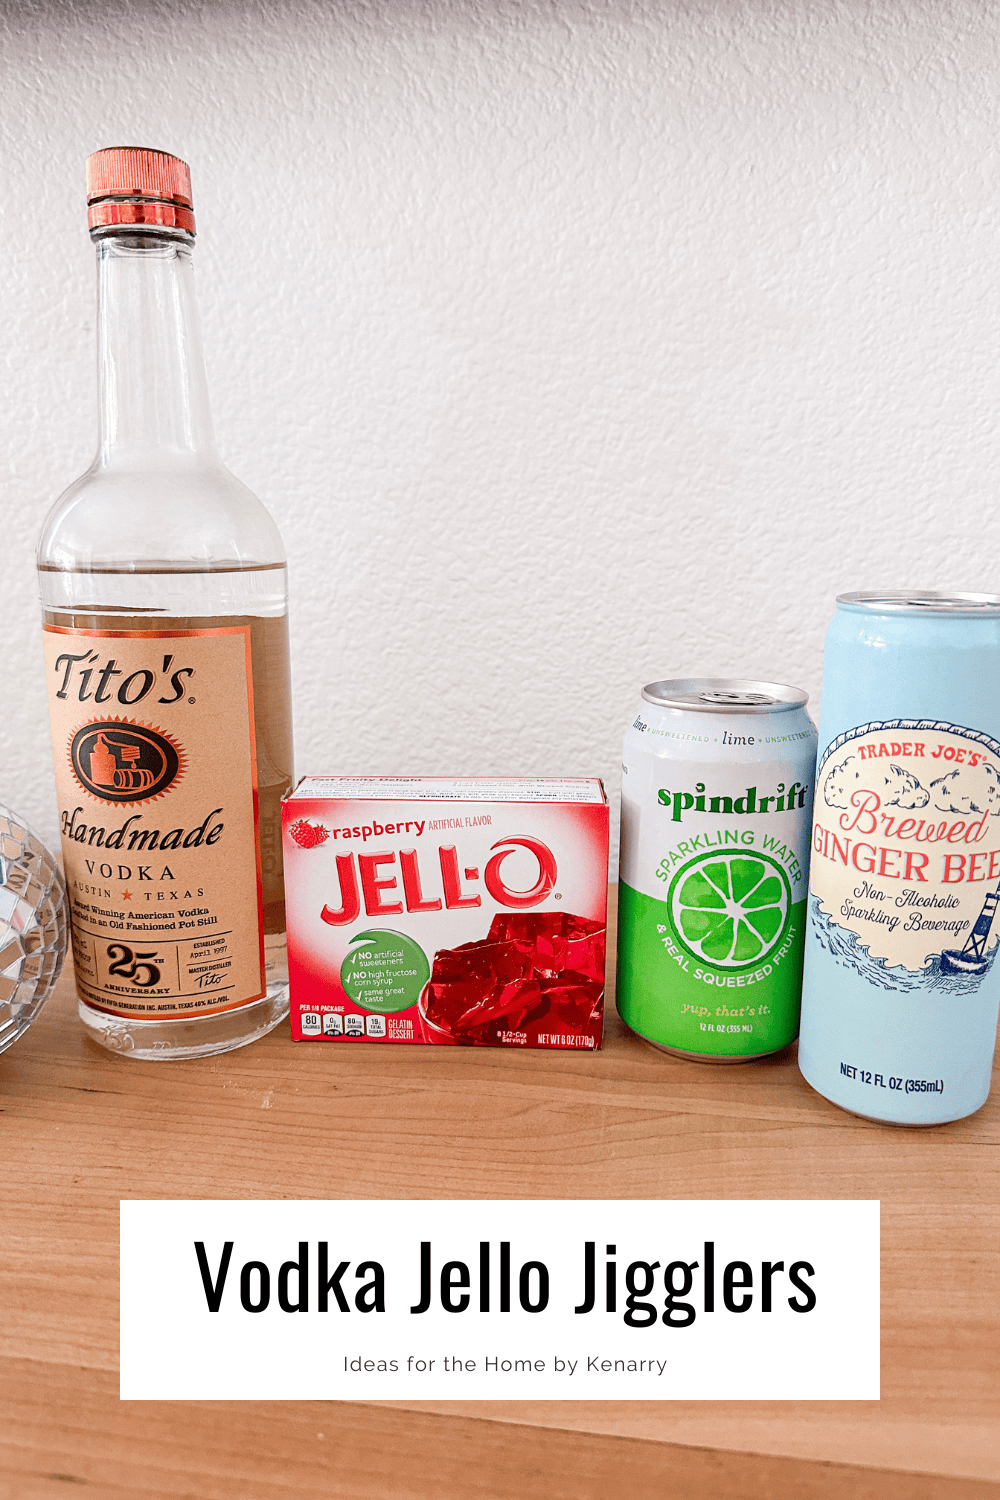 Vodka Jello Jigglers ingredients including vodka, raspberry gelatin, sparkling water, and ginger beer.